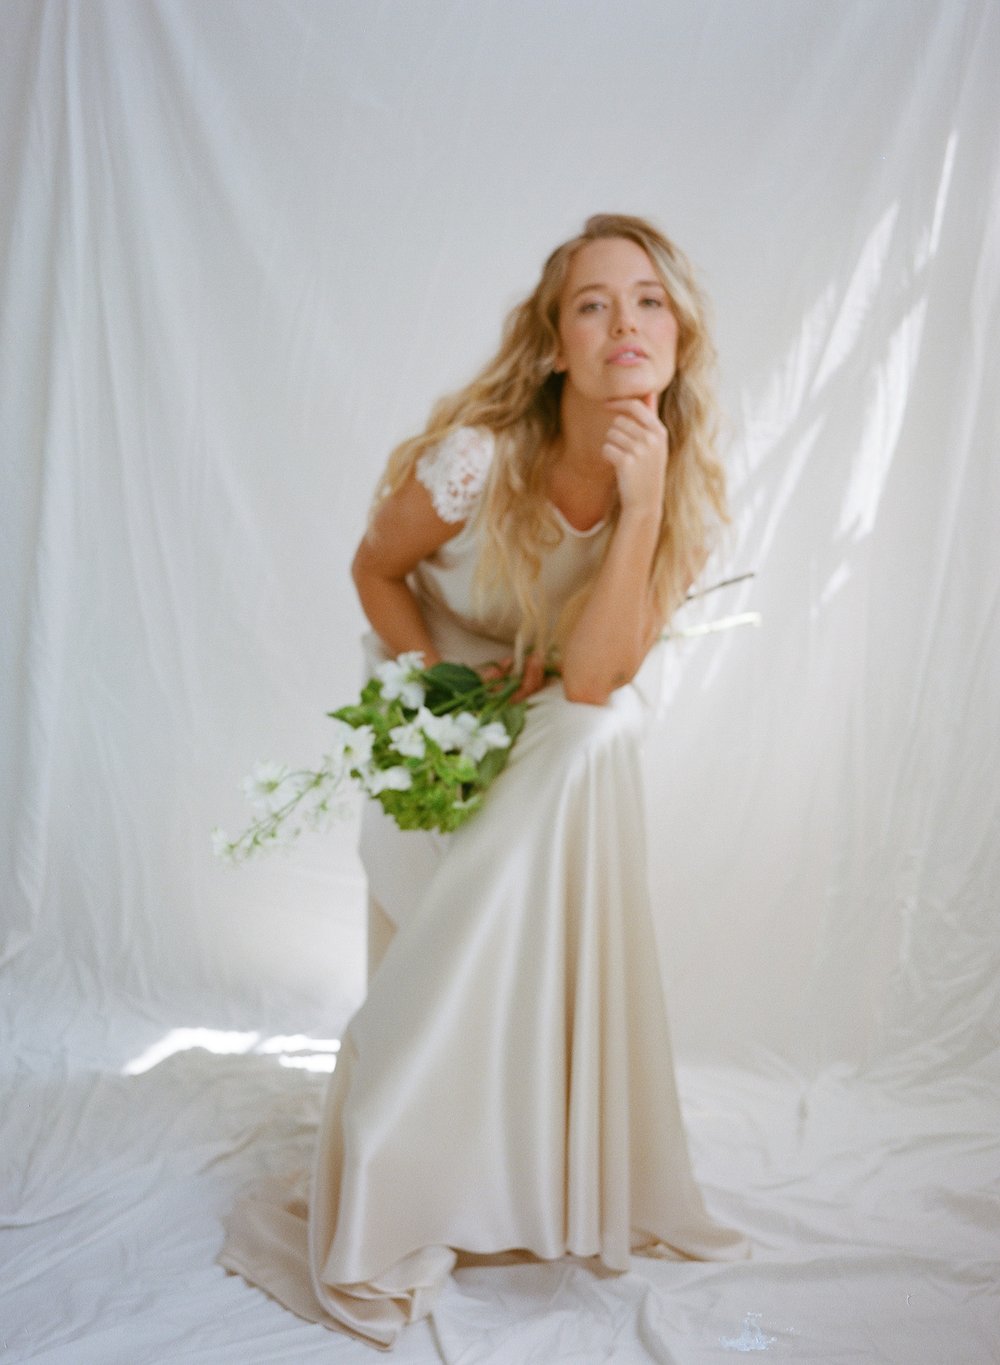 Analogue-shoot-Hollie-Cornish-photographer-Kate-Beaumont-wedding-gowns-Sheffield-5.jpg